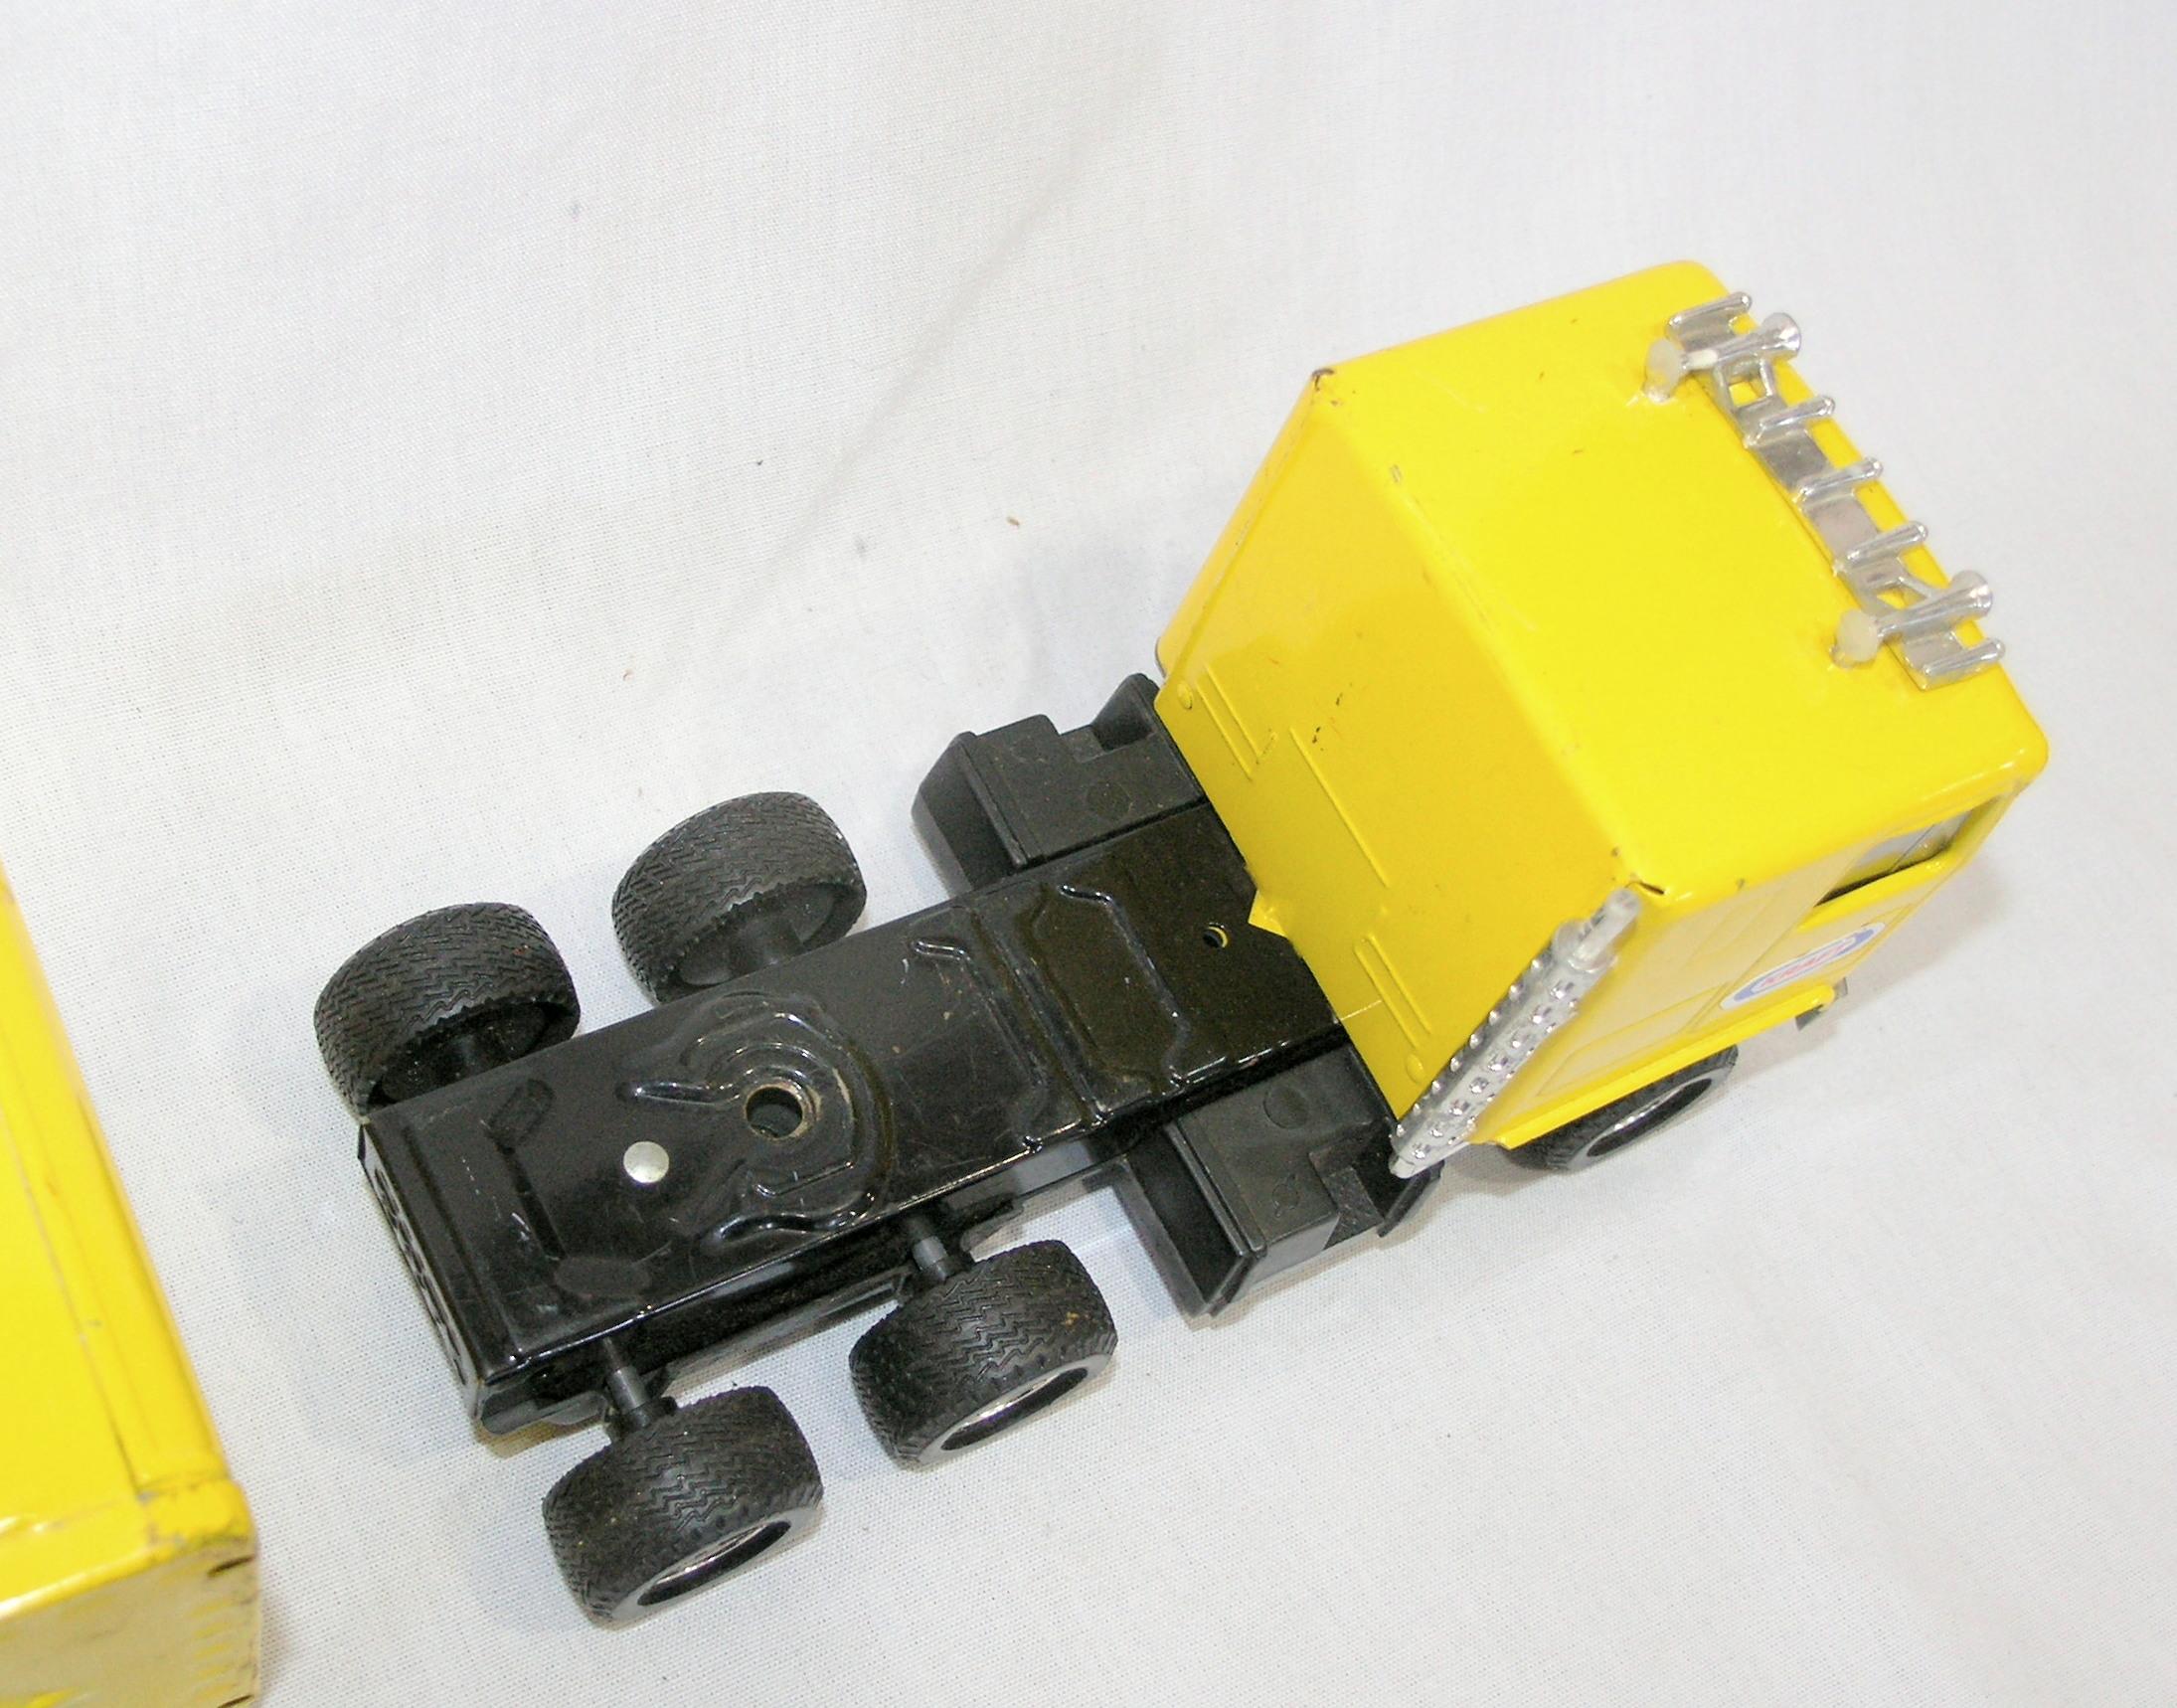 1980s Ertl Toy Semi Tractor & Trailer. Kraft Velveeta. Good Played With Con